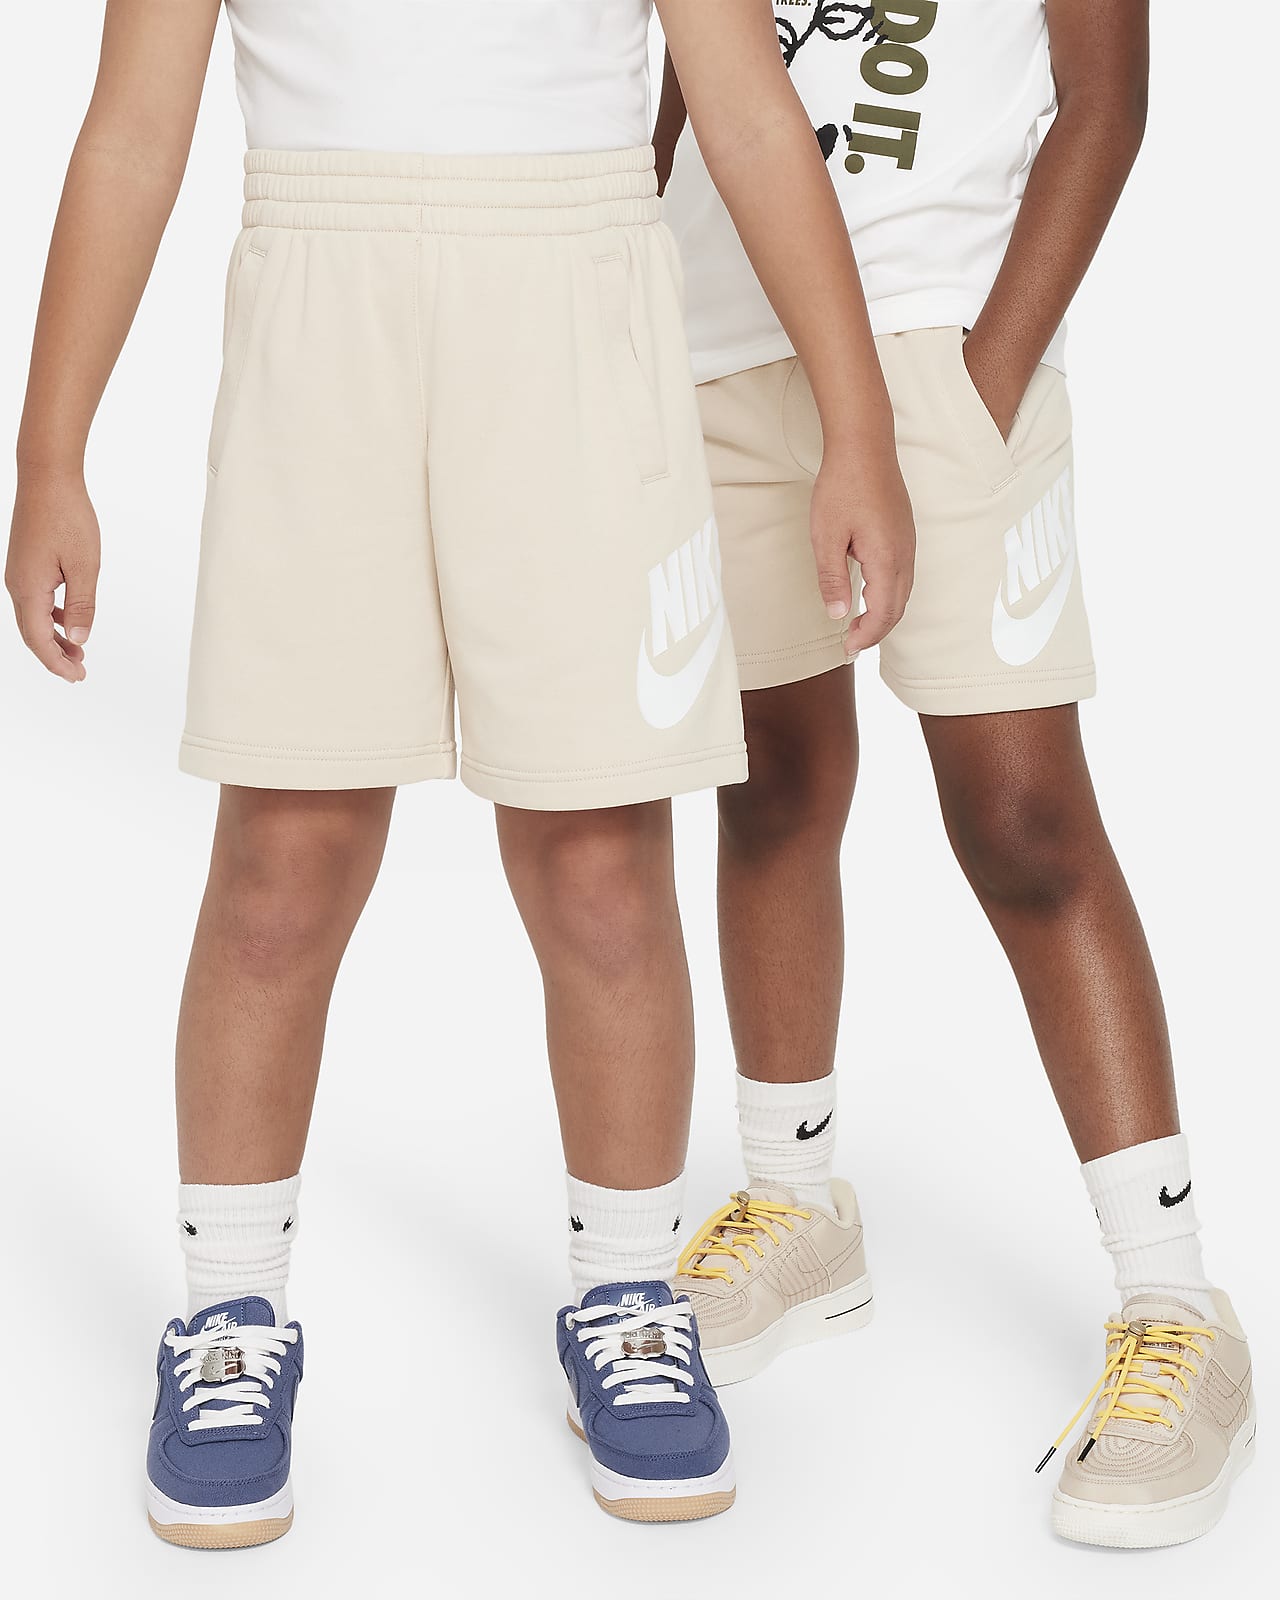 Nike Plus Size Fleece Shorts Womens High-Rise Sanddrift Pockets Lounge  Bottoms